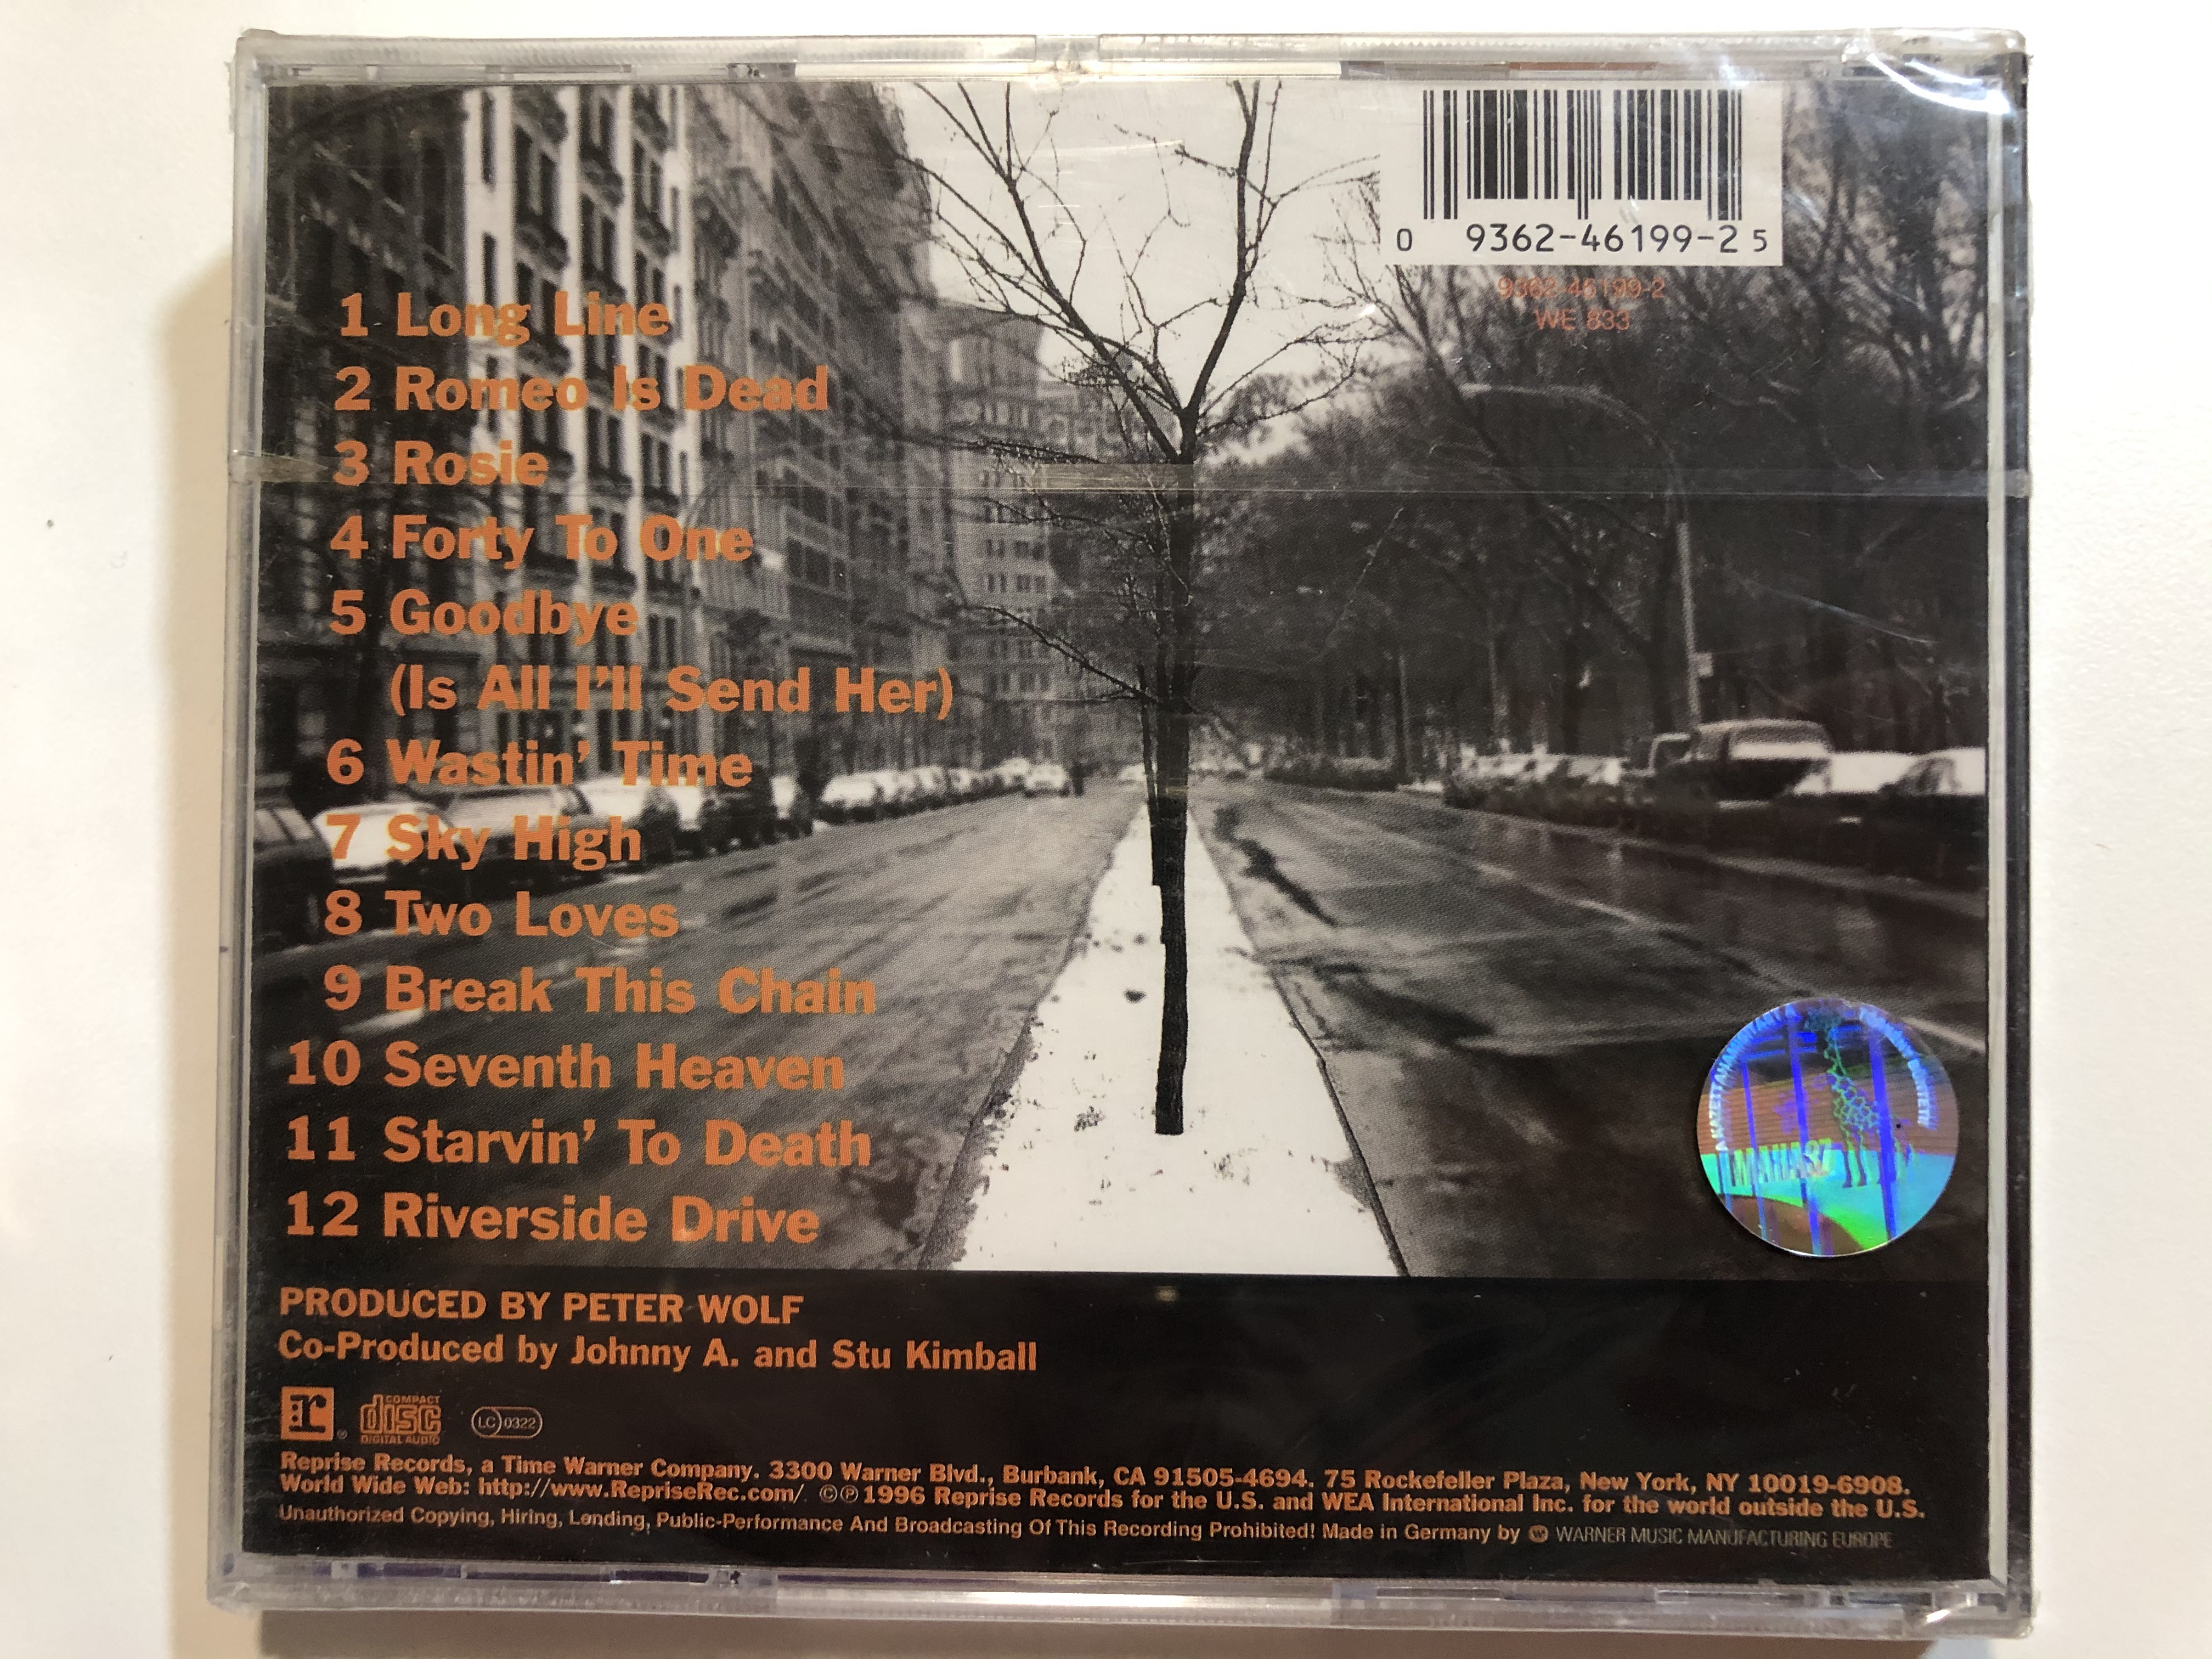 wolf-reprise-records-audio-cd-1996-9-46199-2-2-.jpg